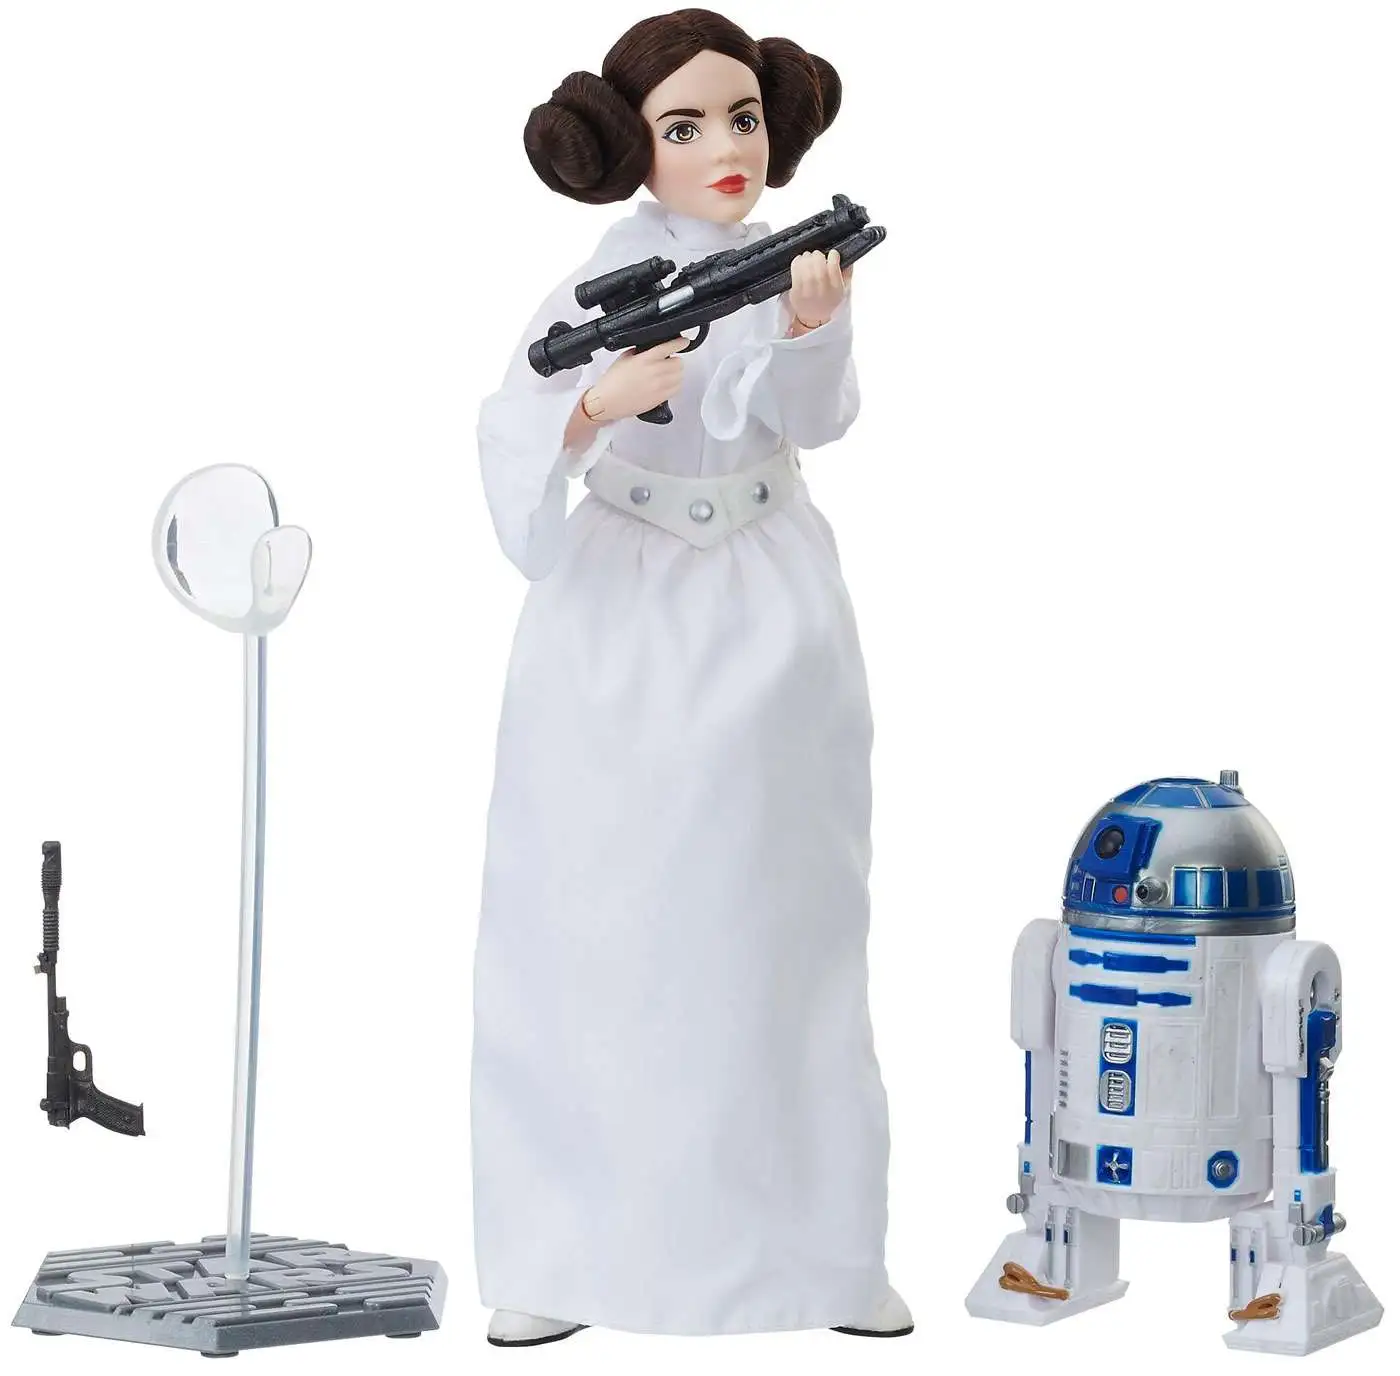 Disney Parks Star Wars Pluto and Minnie Mouse as R2-D2 Princess Leia Figure Set 